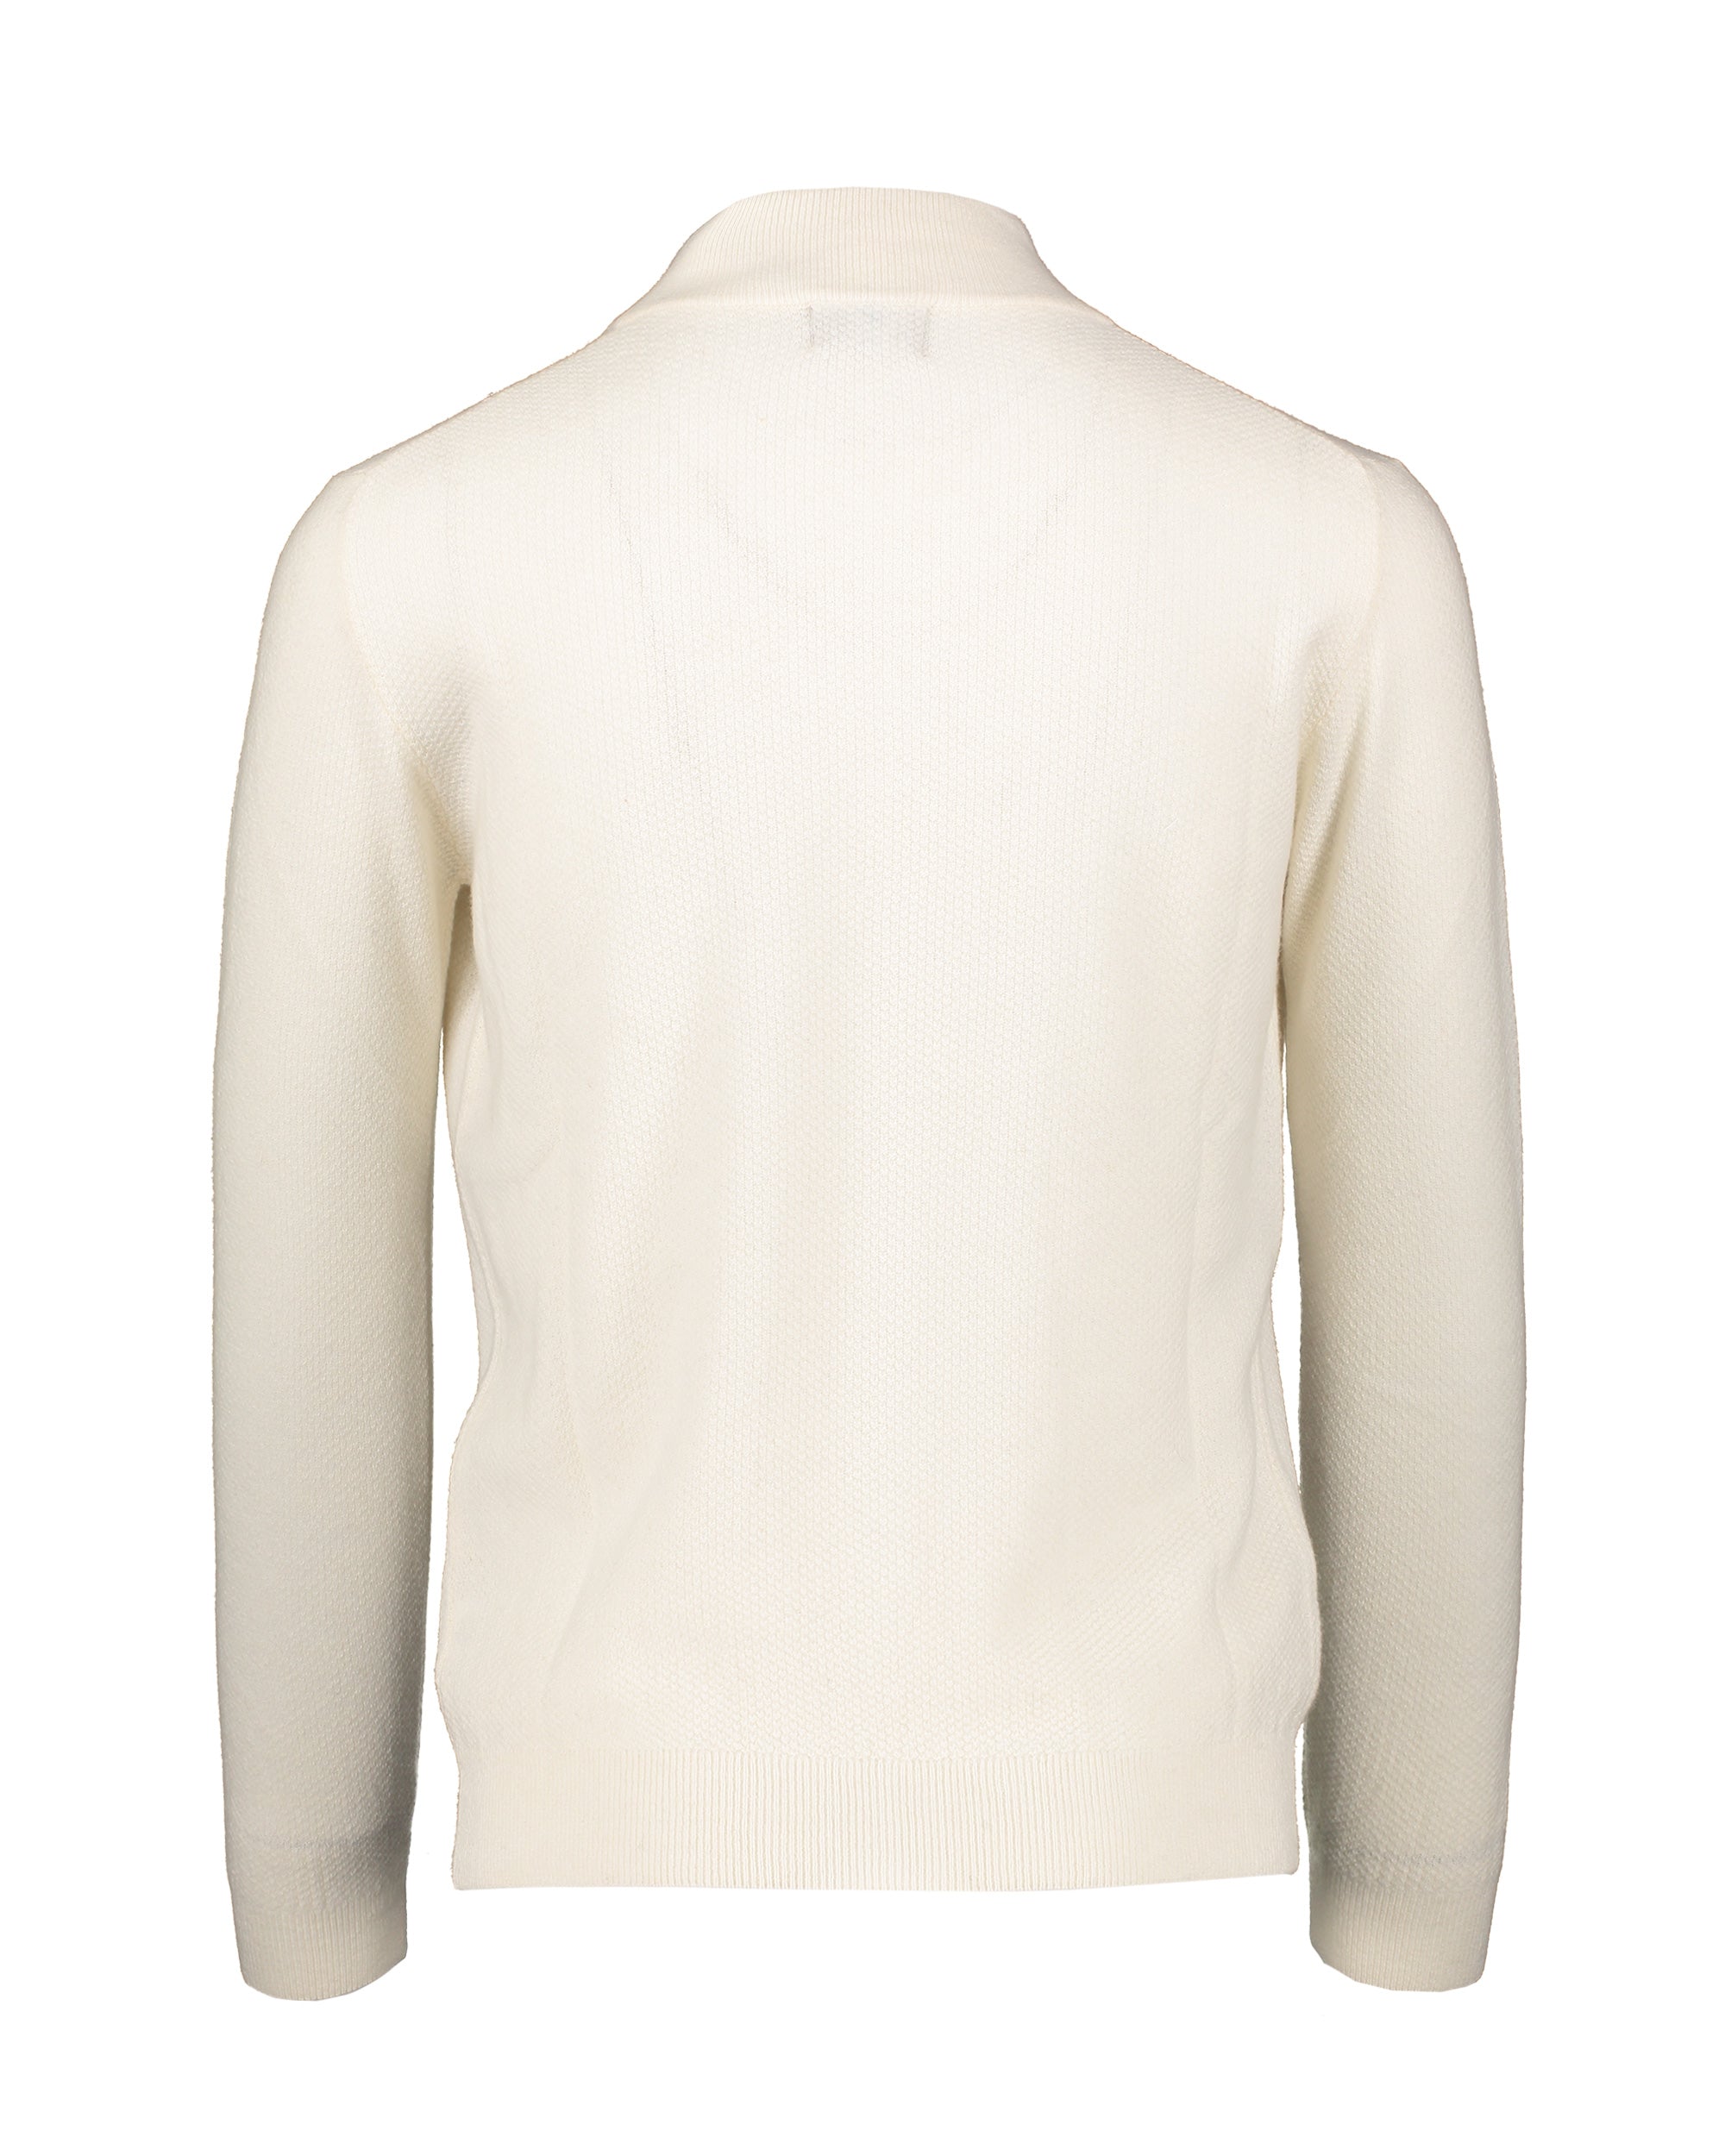 Gunvald White Half Zip Sweater